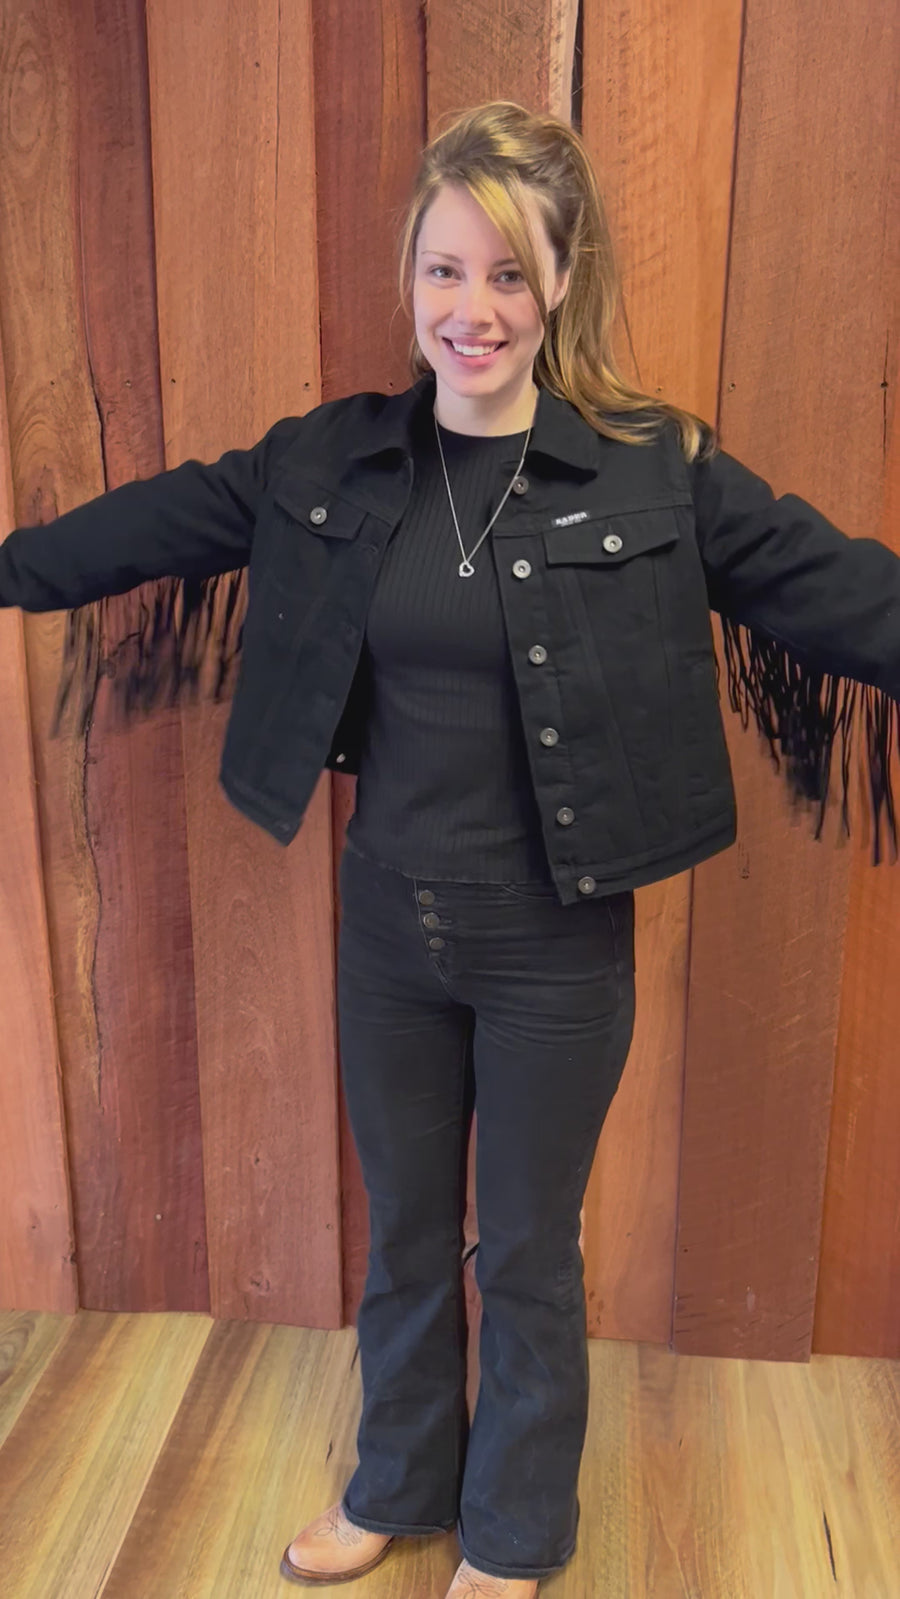 Women's Black Denim Jacket With Tassels